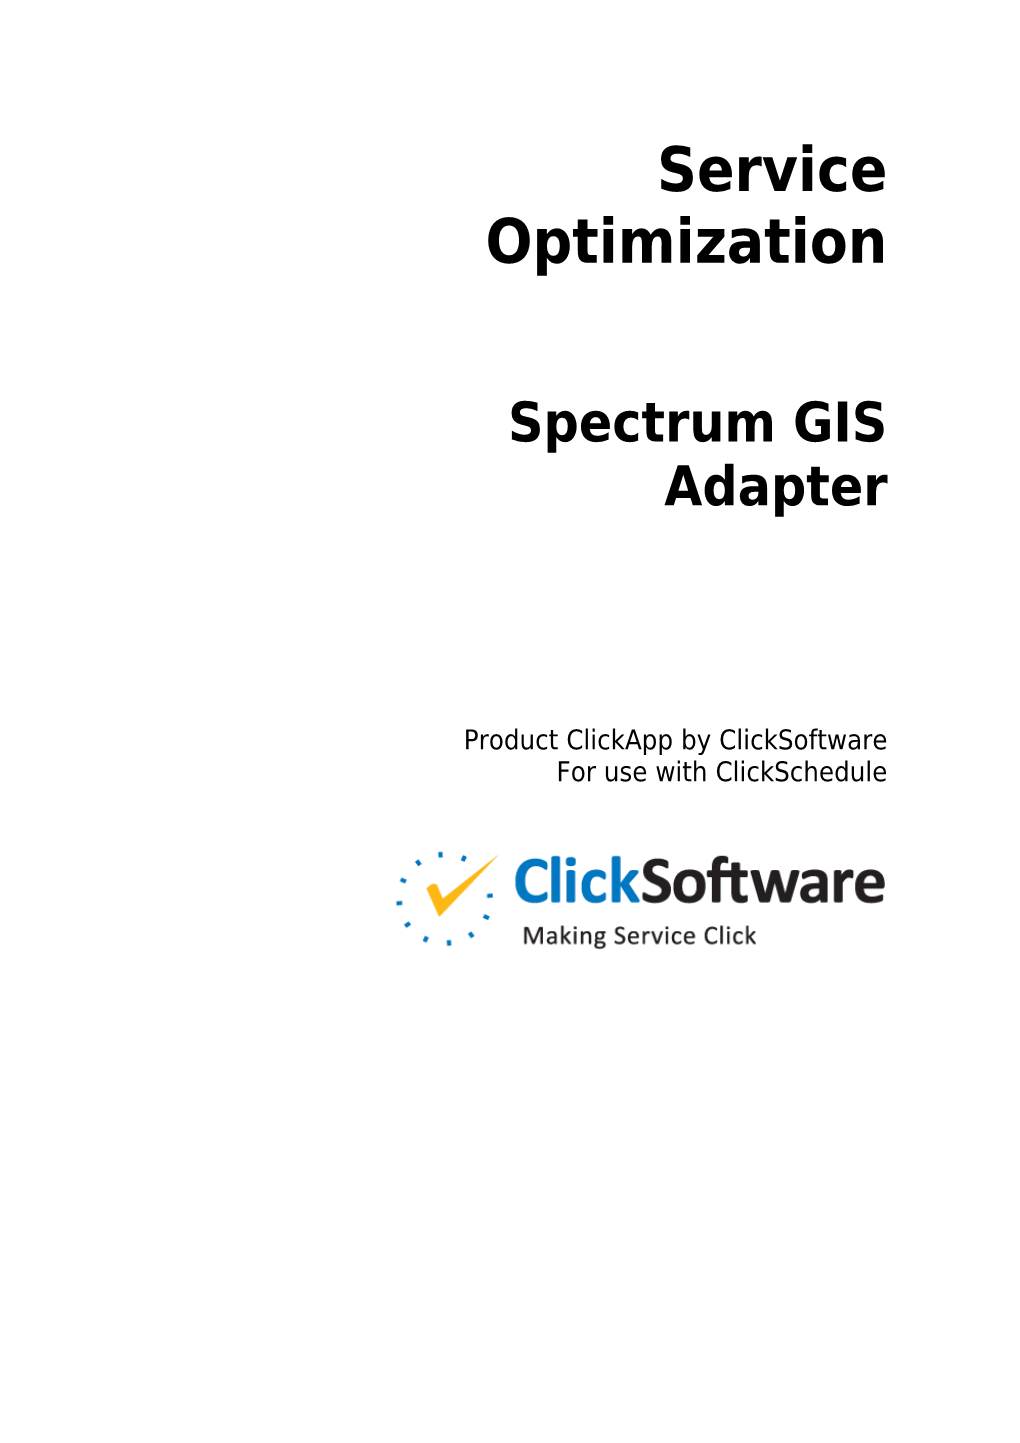 Spectrum GIS Adapter